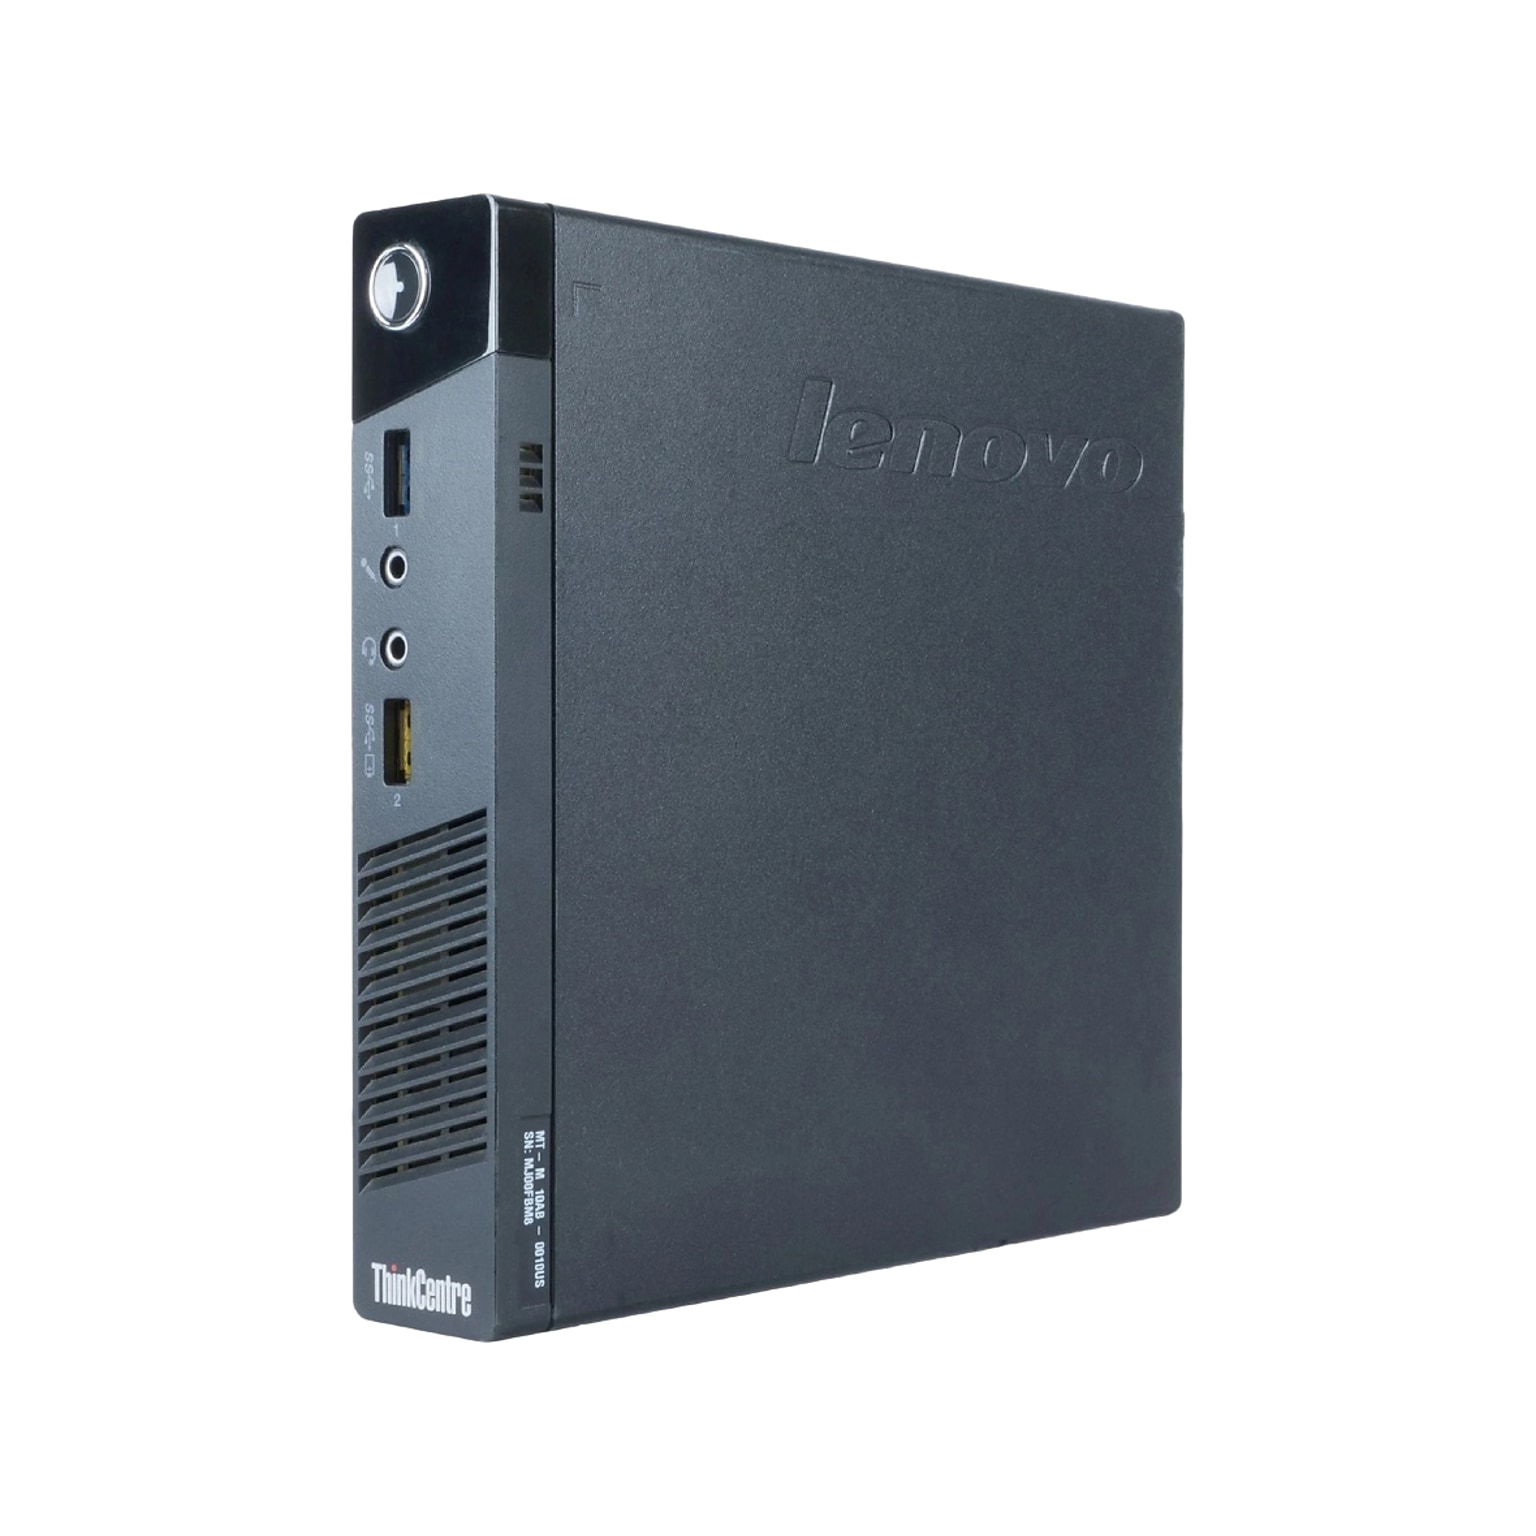 Lenovo ThinkCentre M93p Tiny Refurbished Desktop Computer, Intel Core i7-4765T, 8GB Memory, 256GB SSD